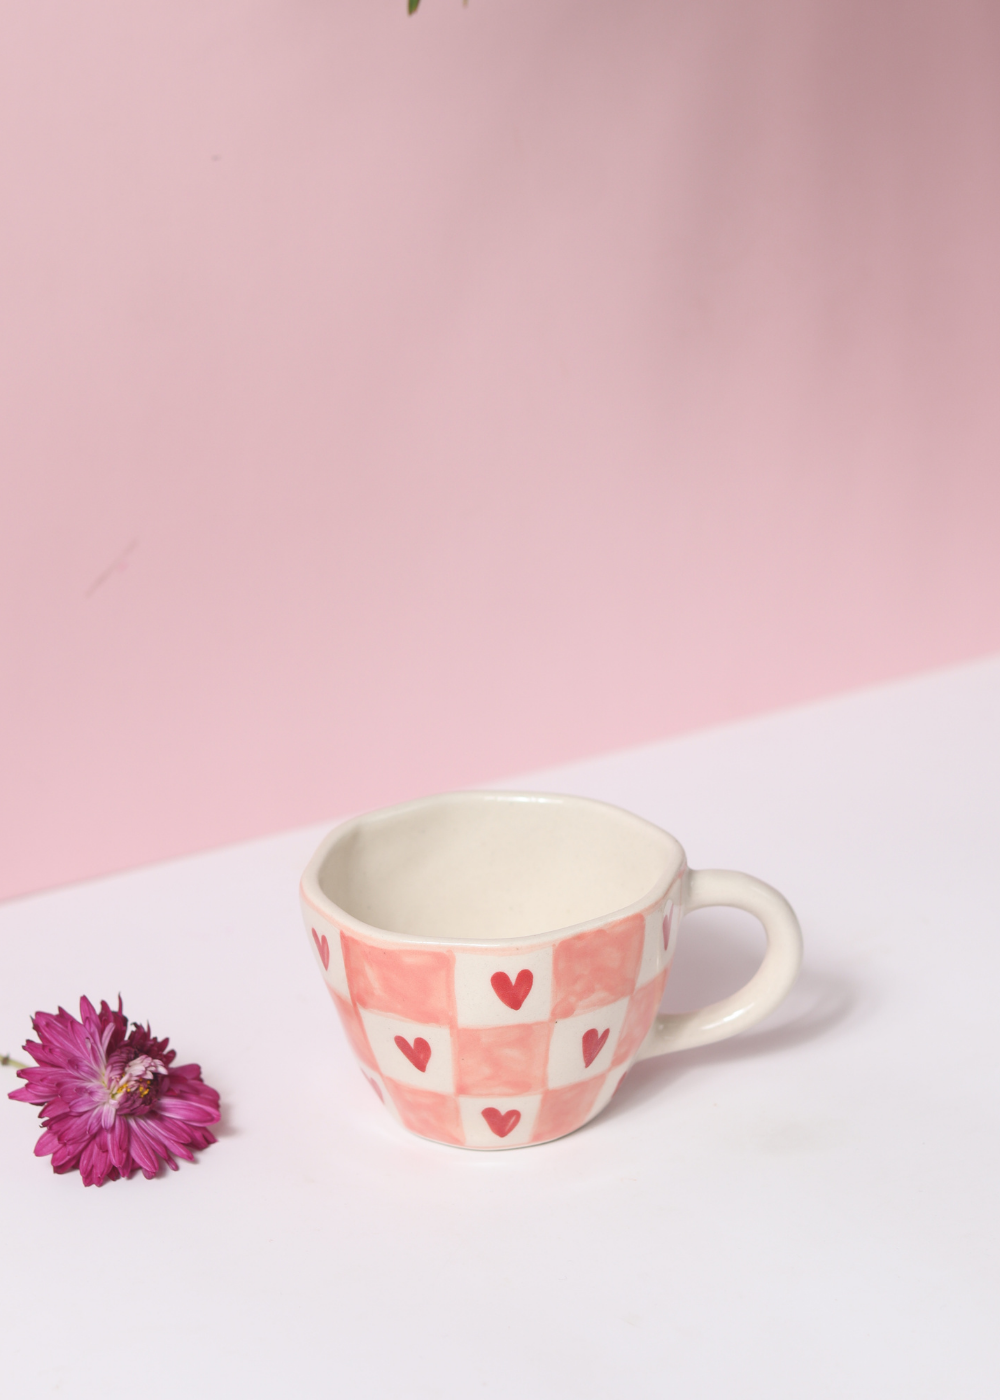 Chequered heart coffee mug with flower